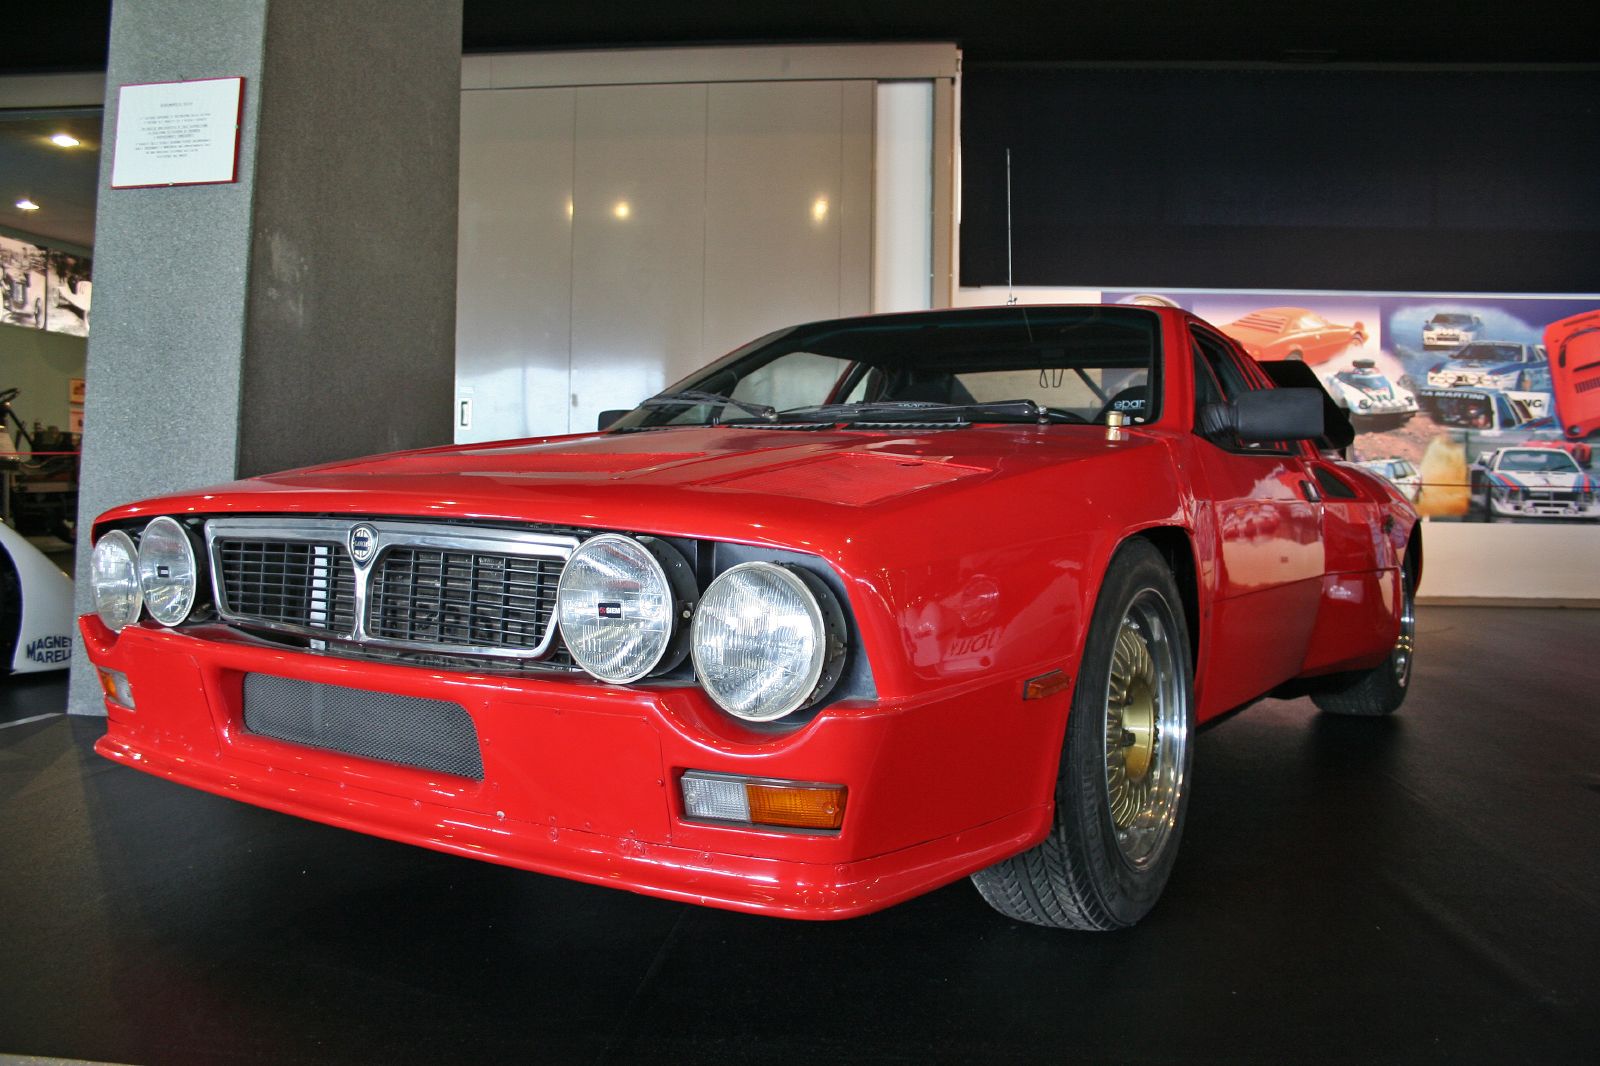 Abarth Lancia 037